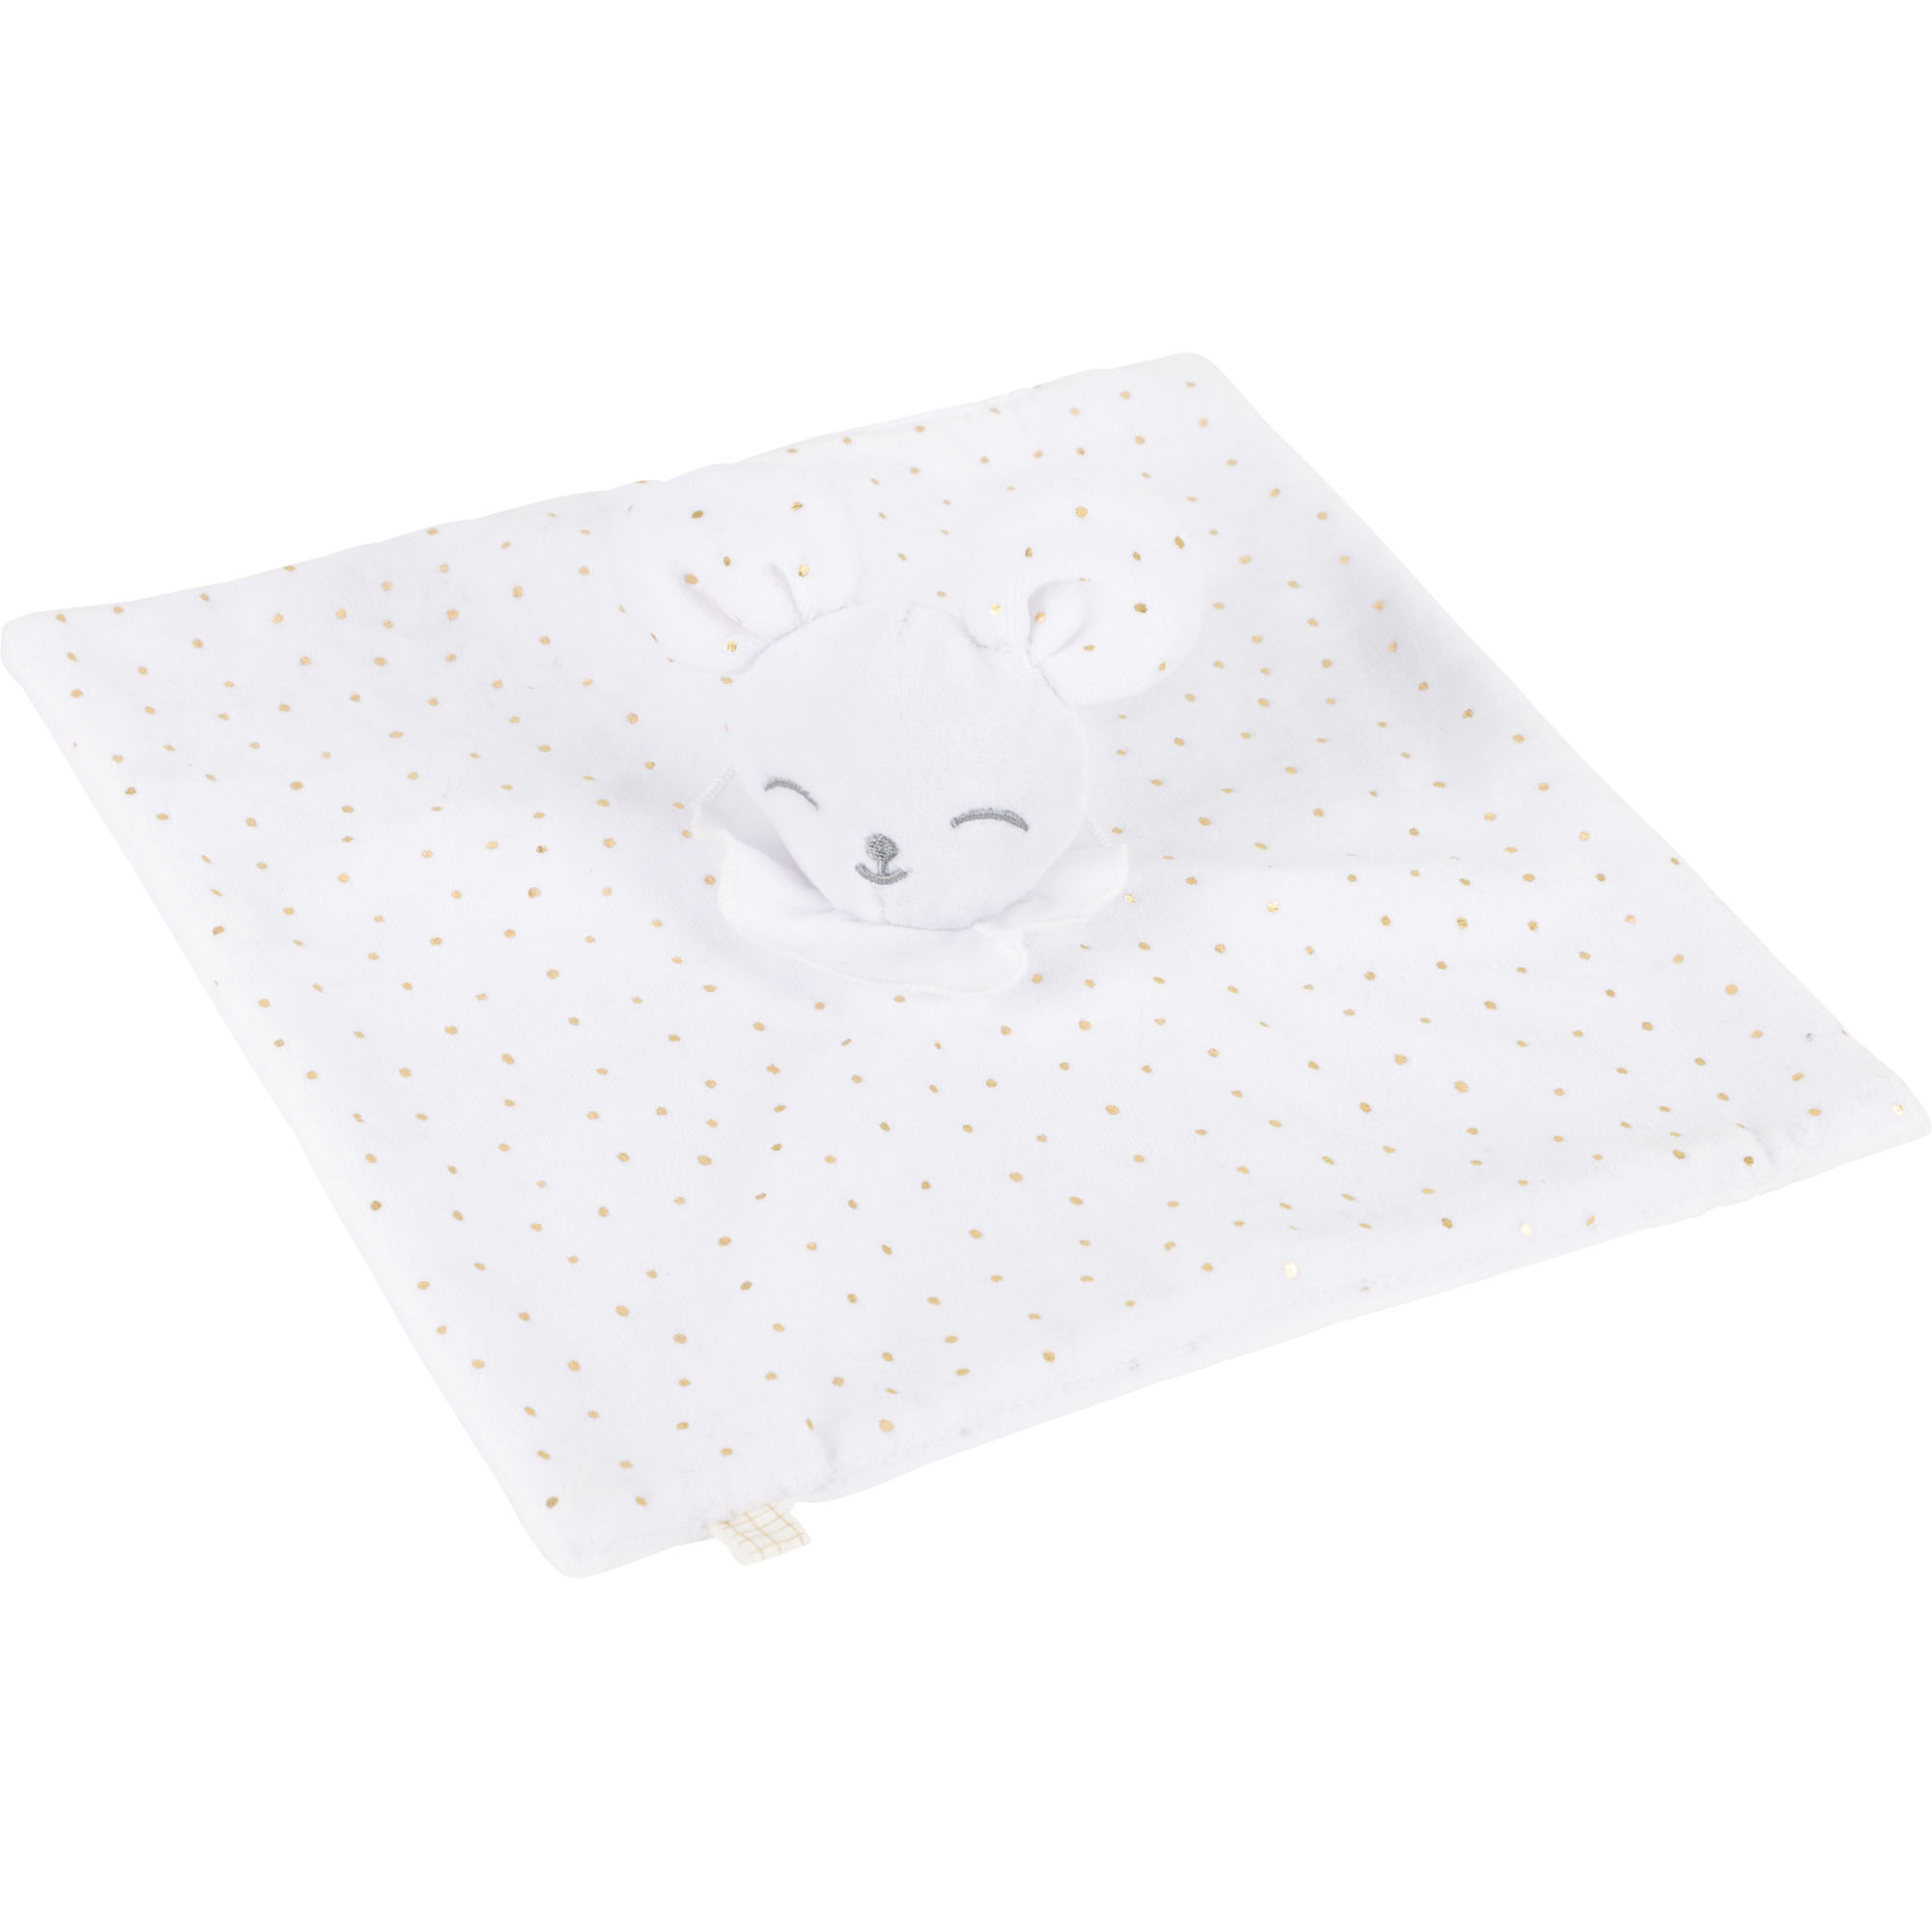 Polka dot mouse comforter CARREMENT BEAU for GIRL